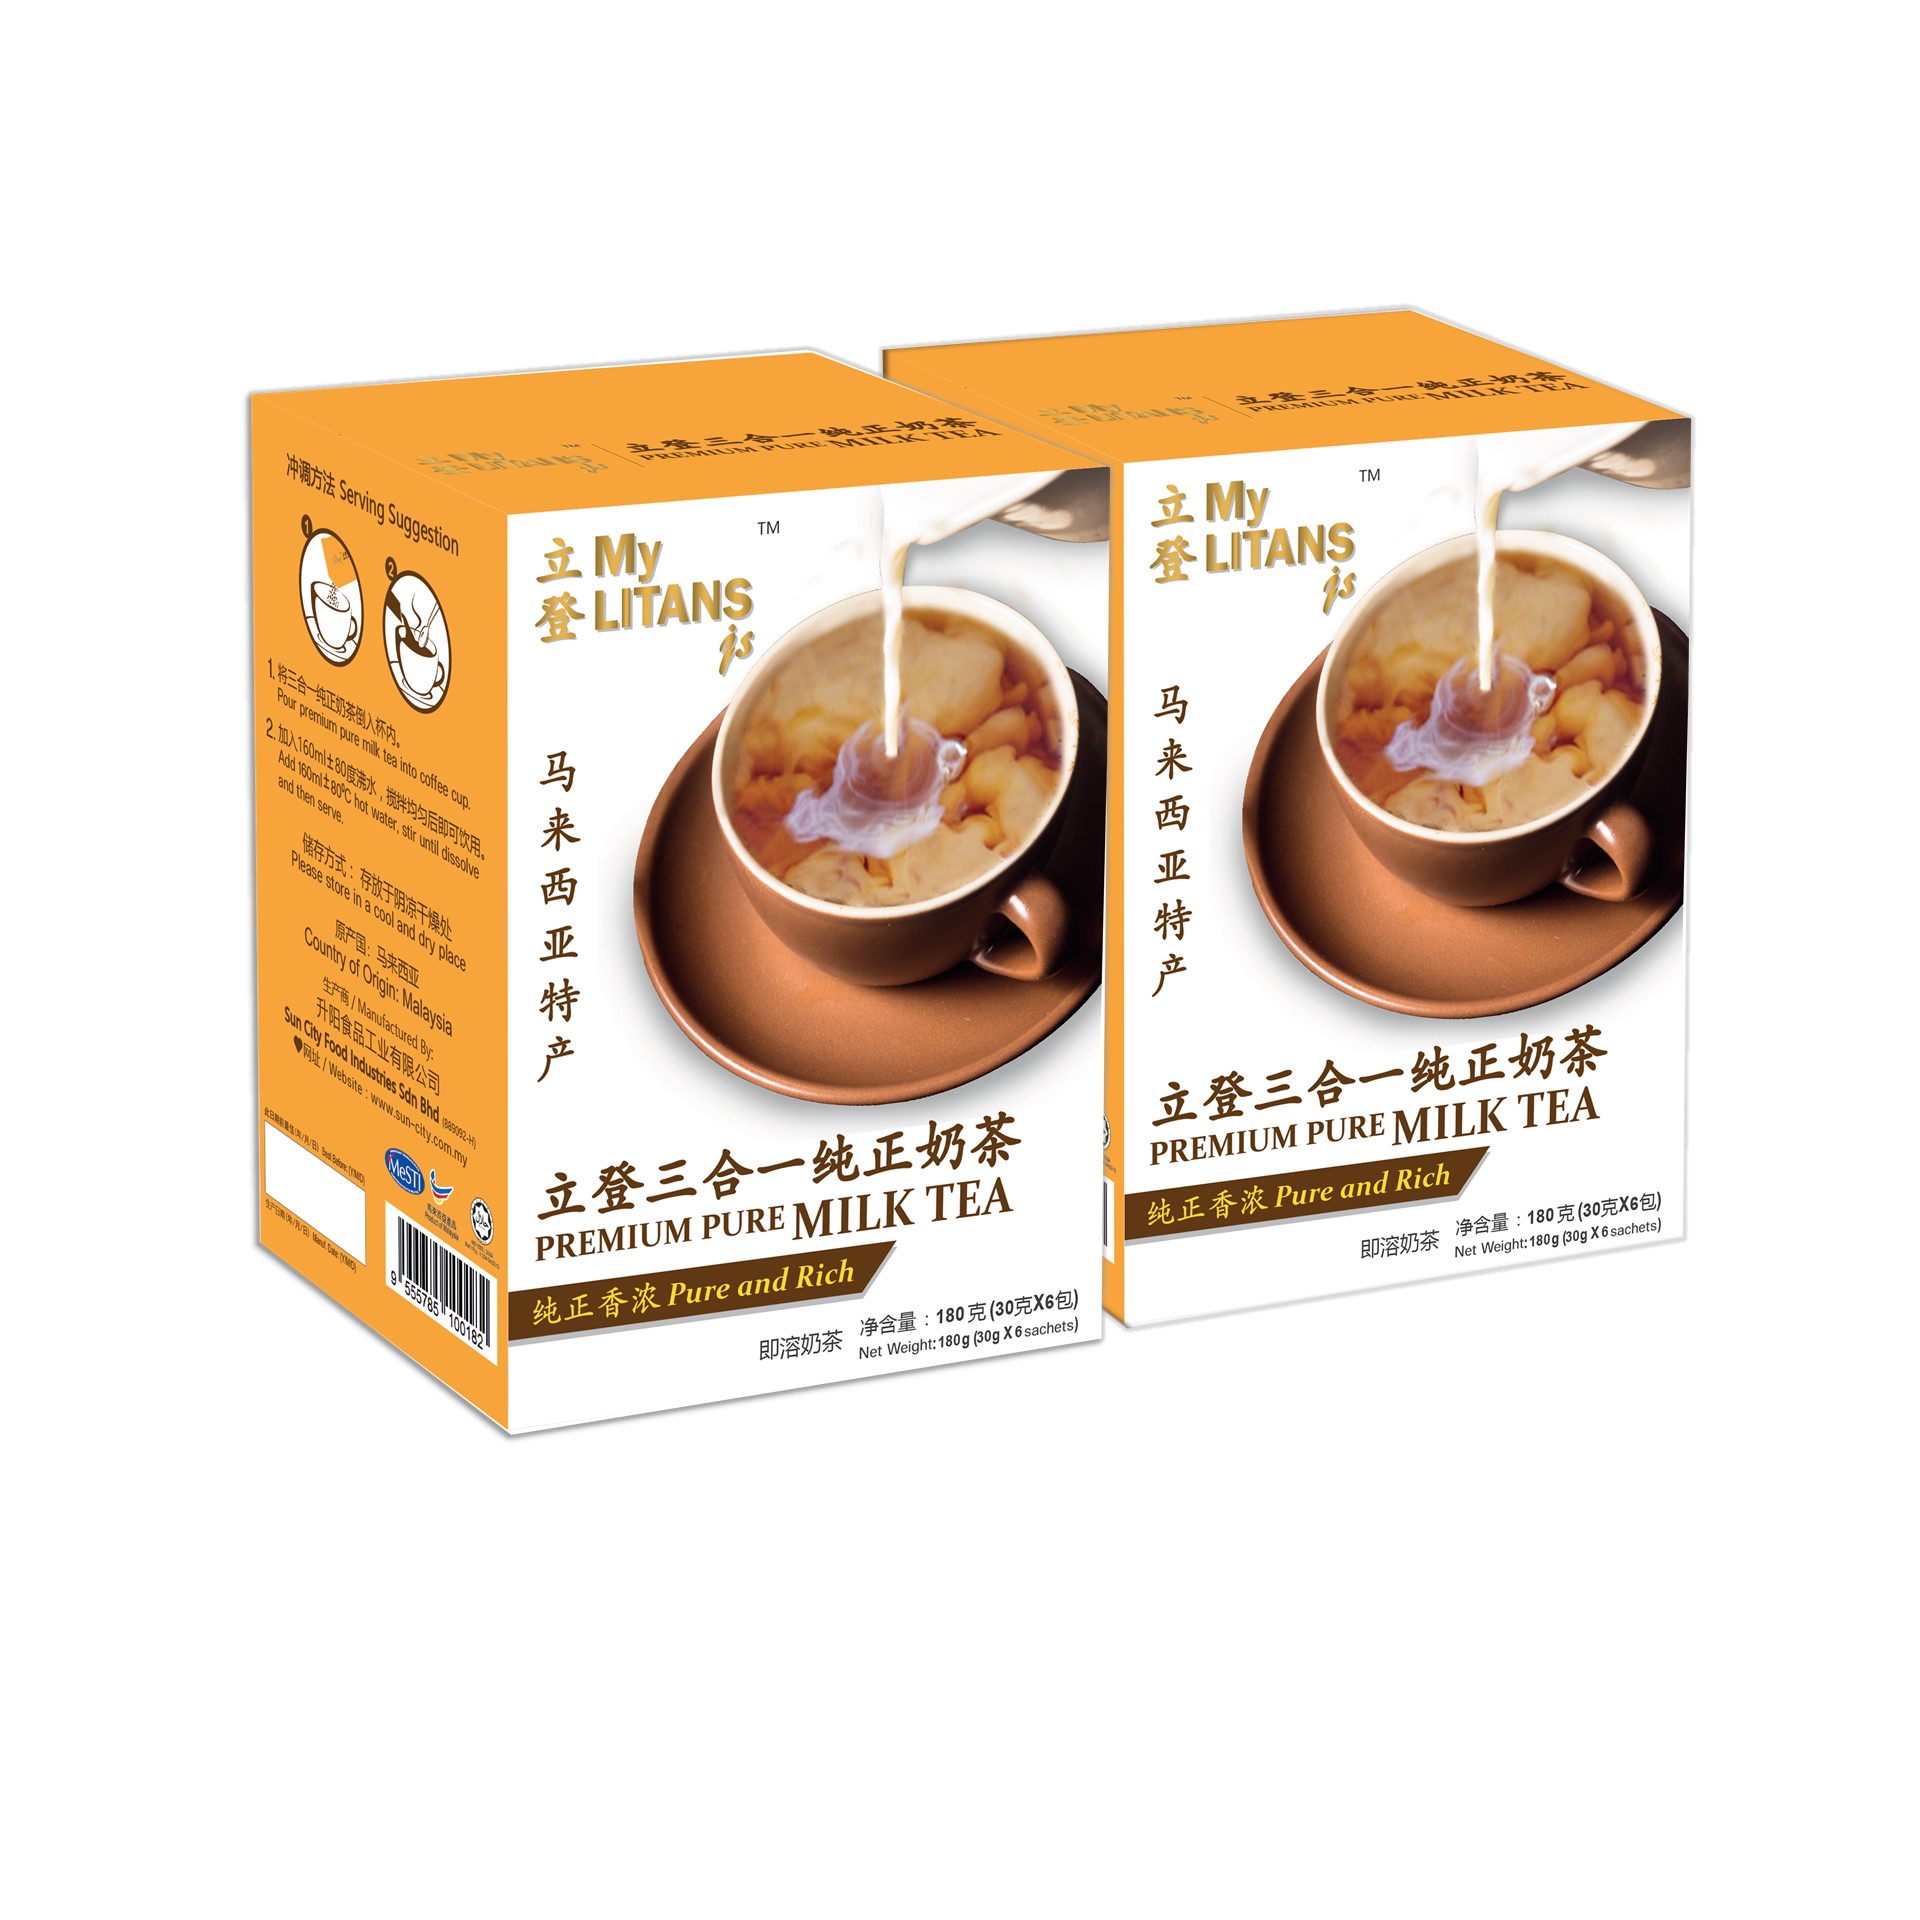 MyLITANSjs 3 in 1 Premium Pure Milk Tea [2 box] (30 g x 6 sachets)